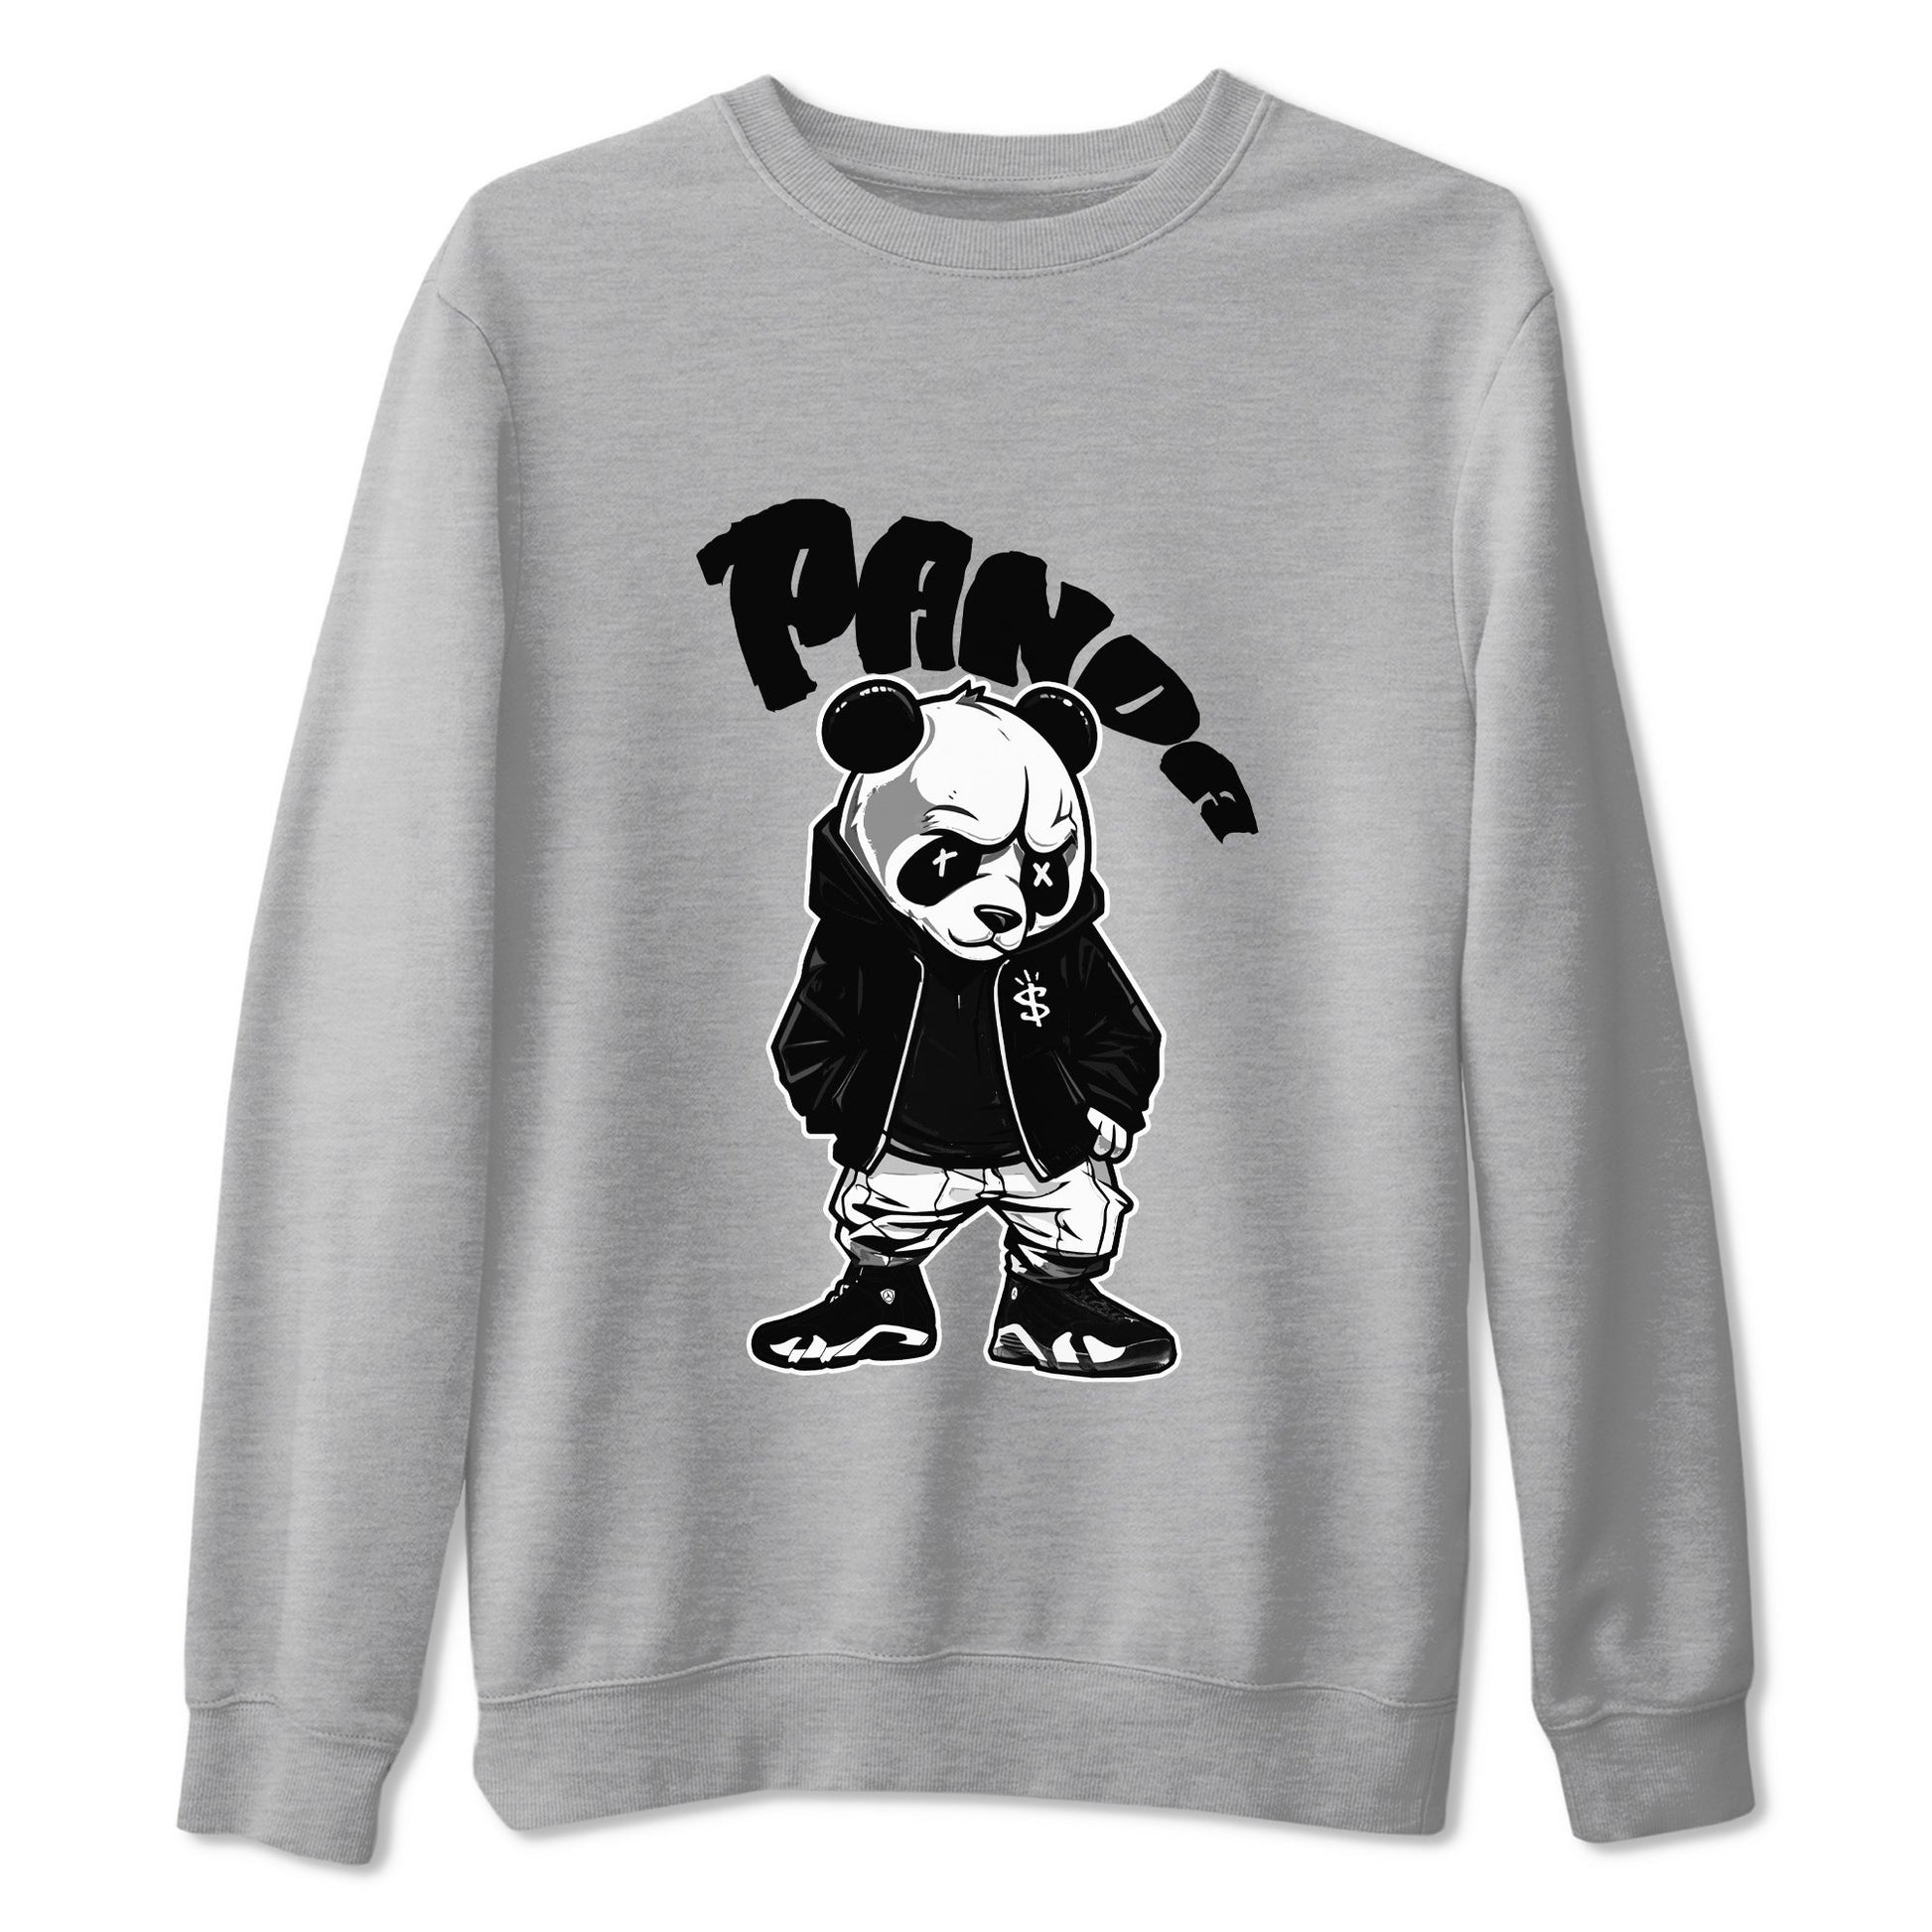 14s Panda shirt to match jordans Bastard Panda sneaker tees Air Jordan 14 Panda SNRT Sneaker Release Tees Unisex Heather Grey 2 T-Shirt